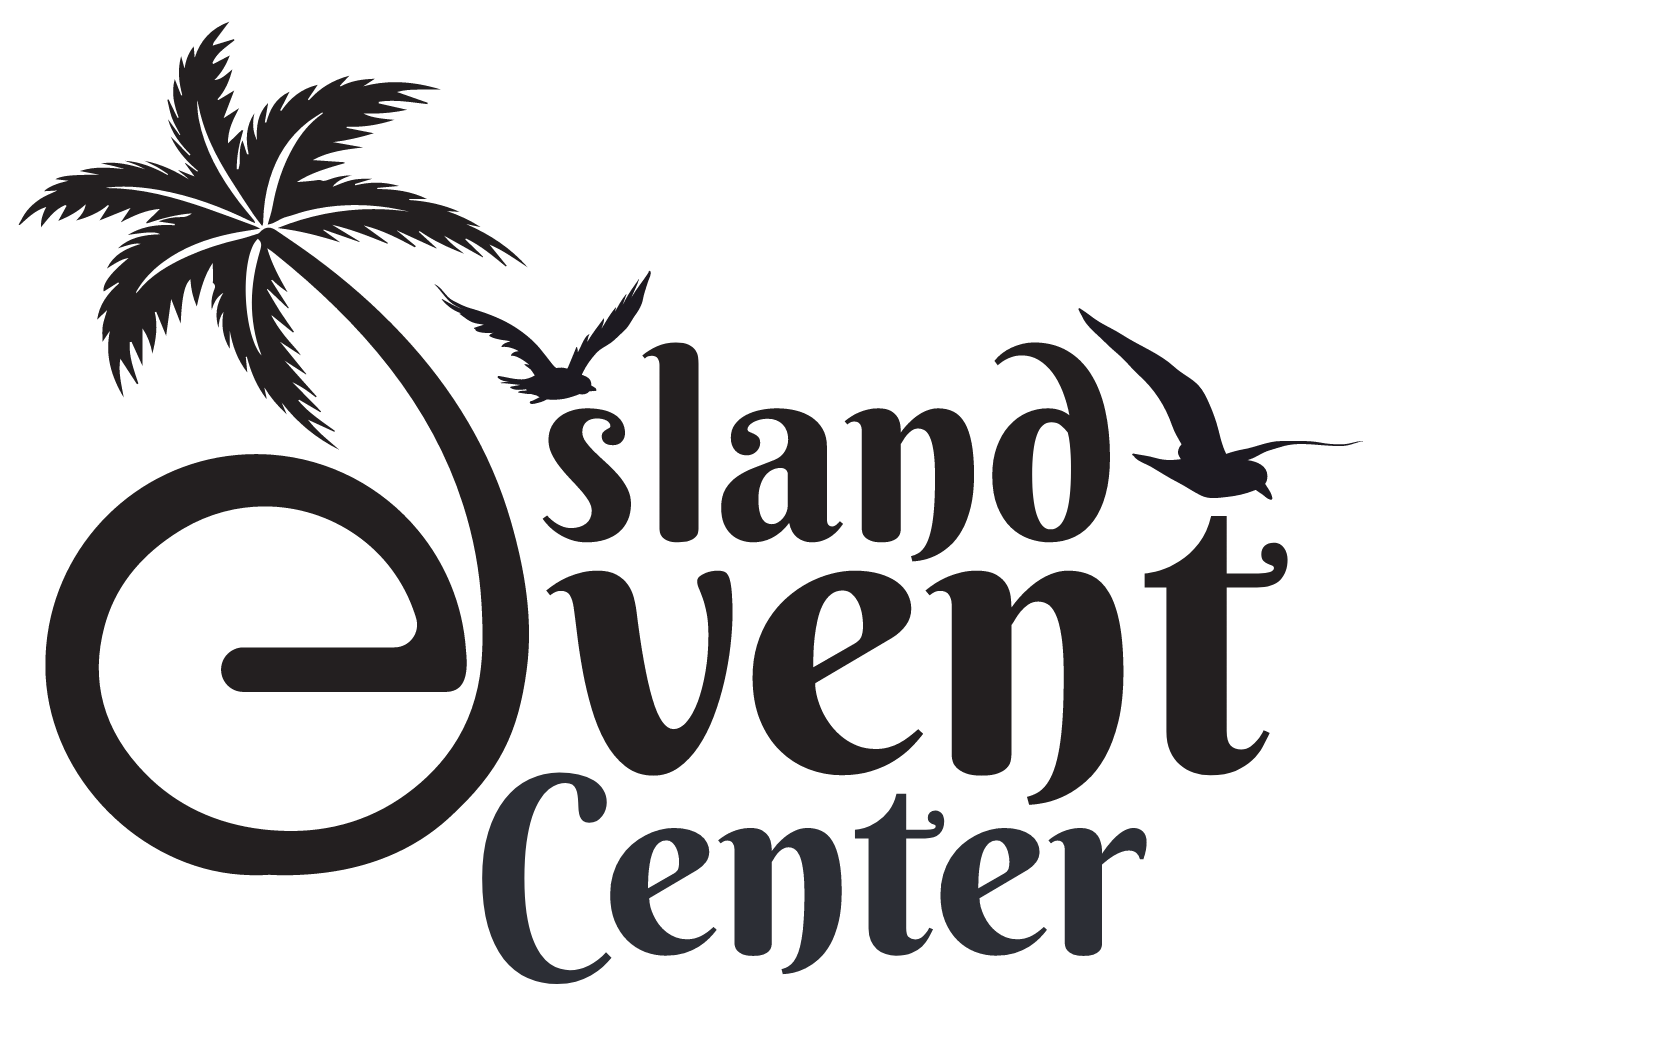 Island Event